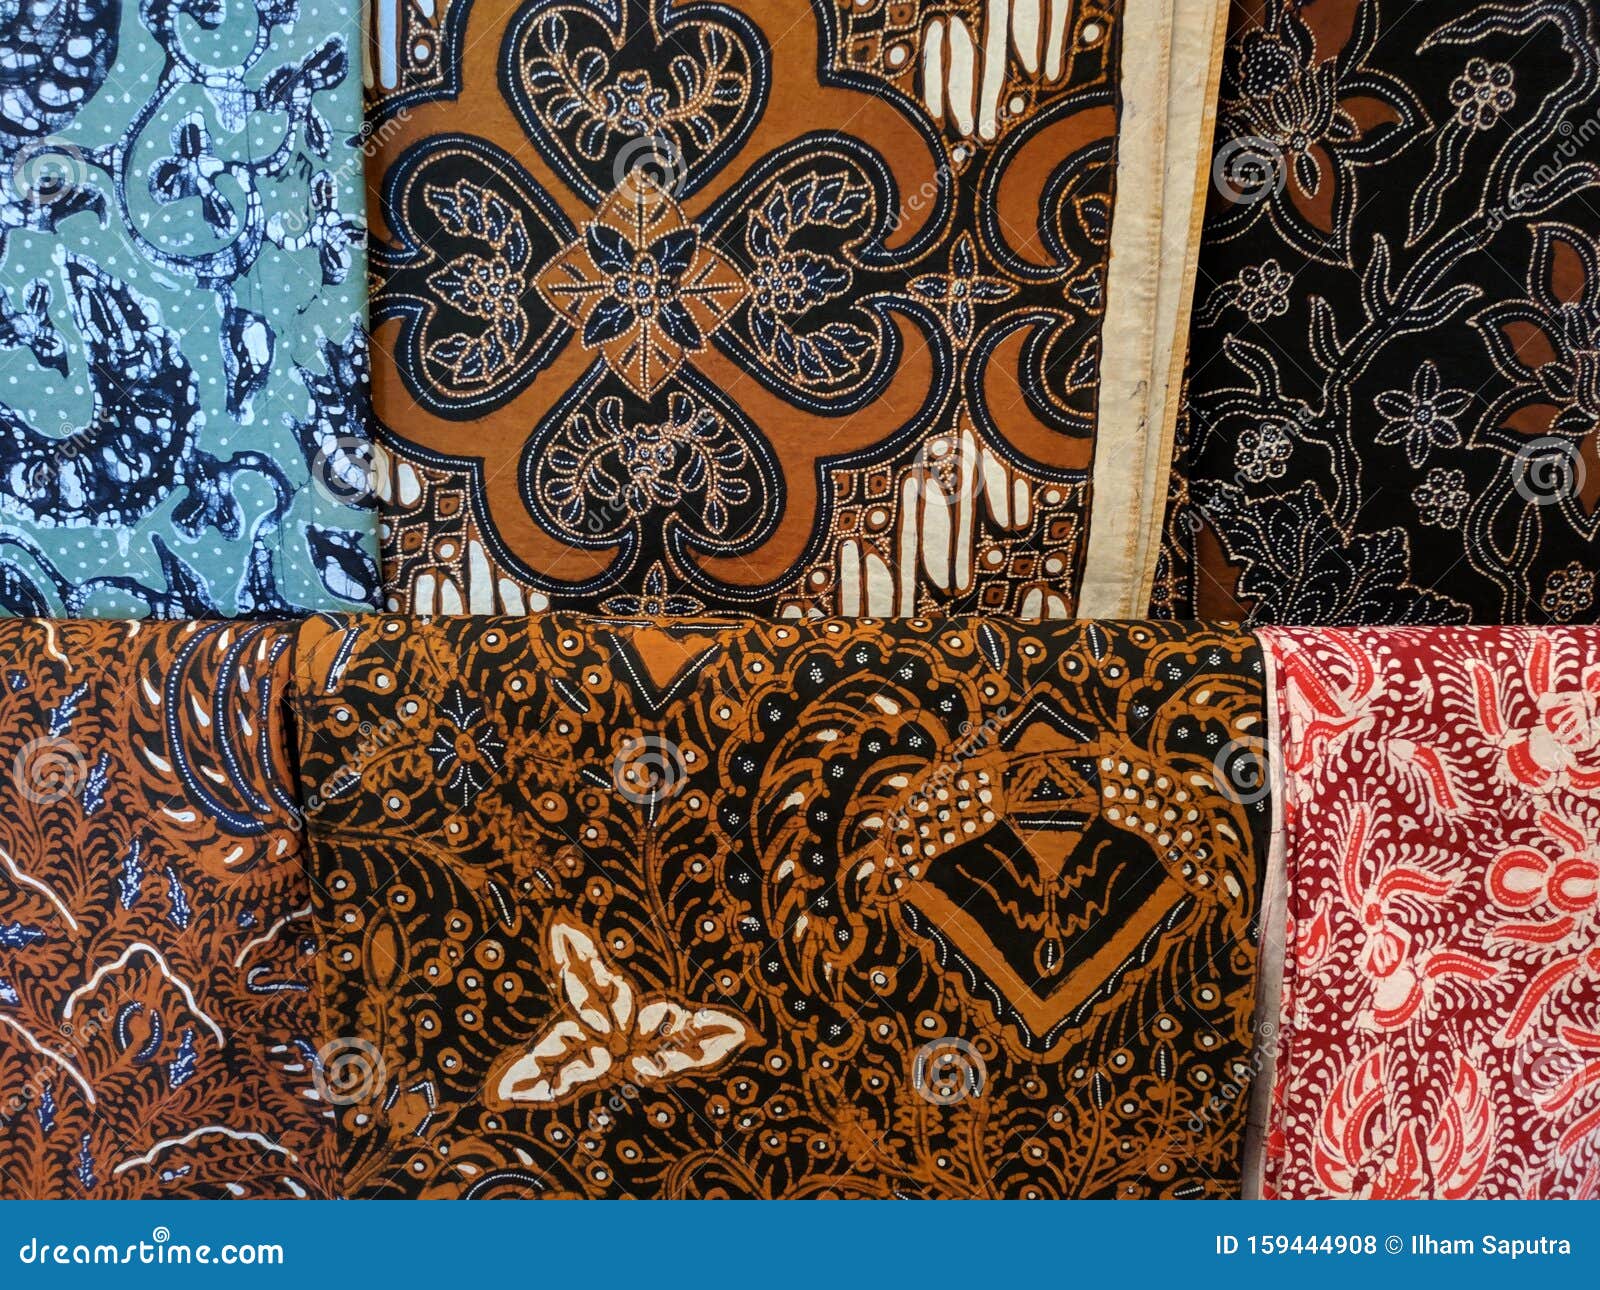  Batik  Cloth Motif From Yogyakarta  Indonesia Stock Photo 